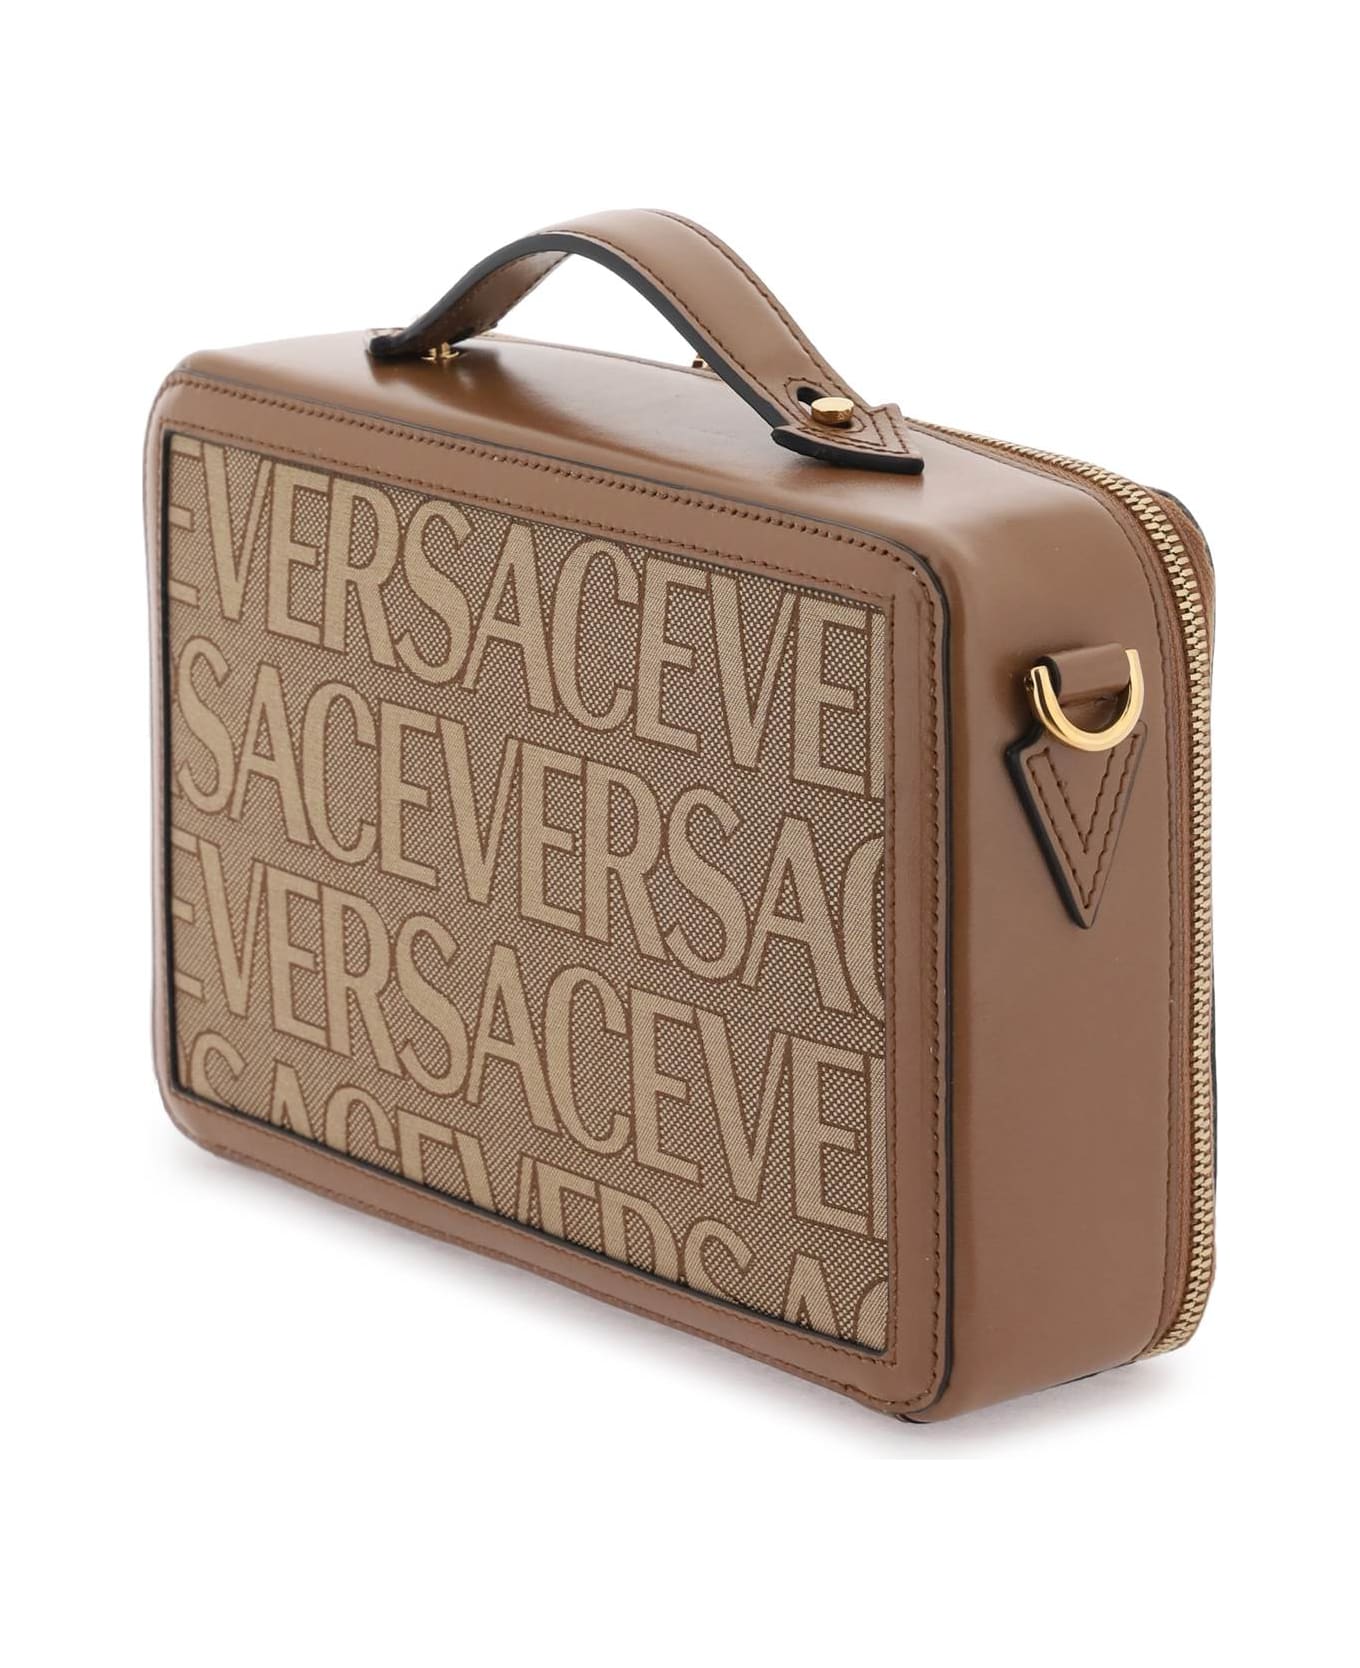 Versace Canvas Messenger Bag - Beige